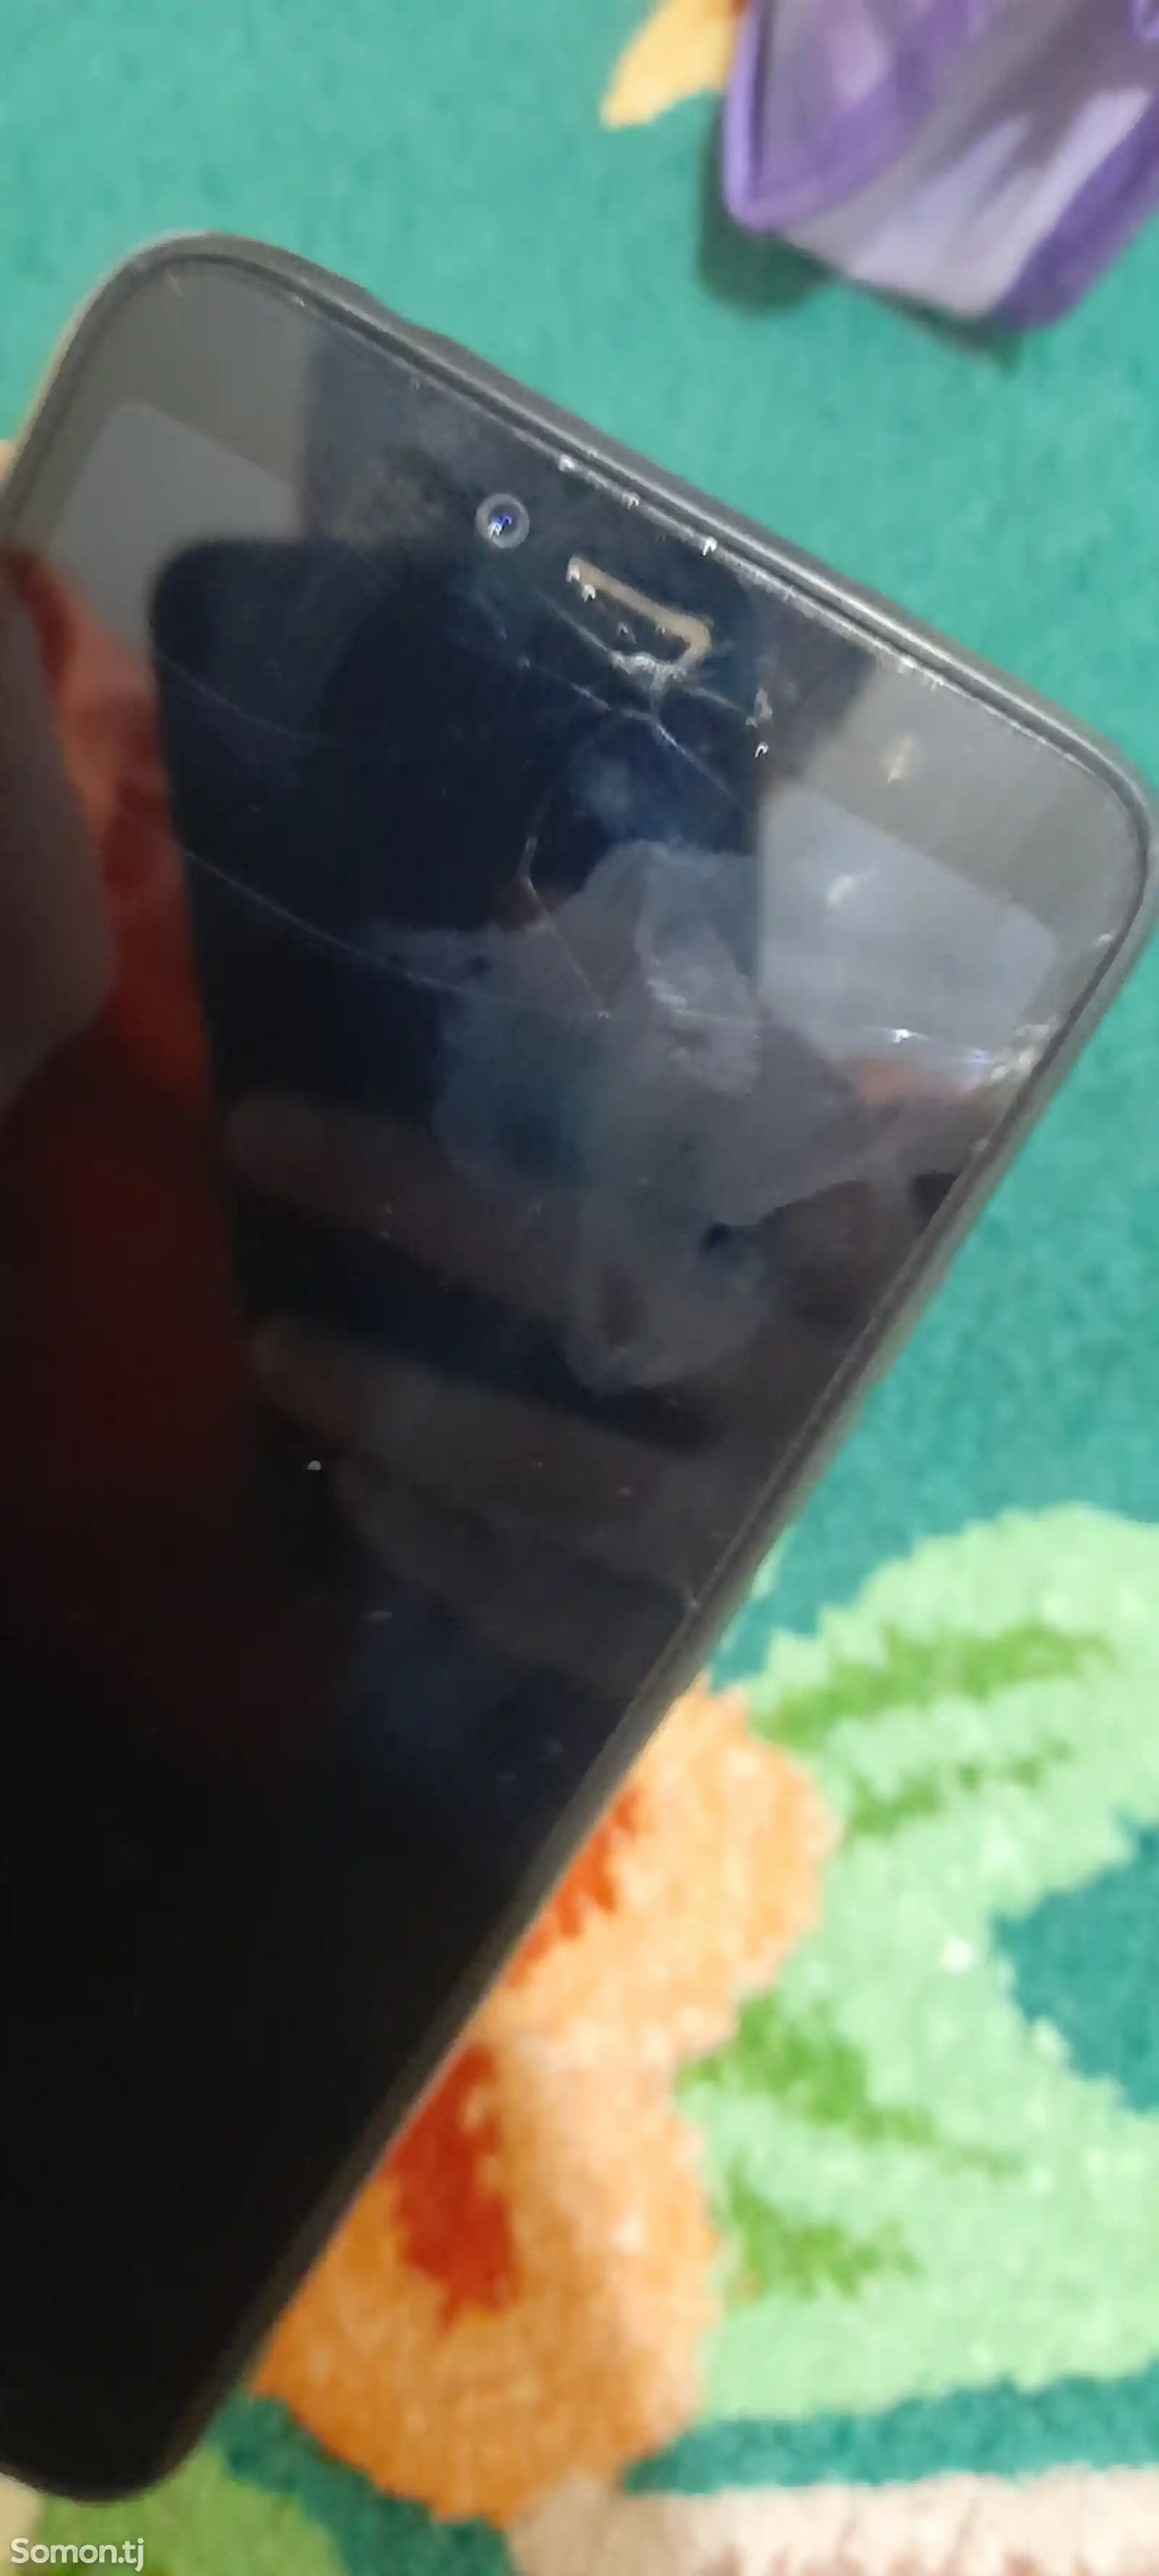 Xiaomi Redmi S2-3